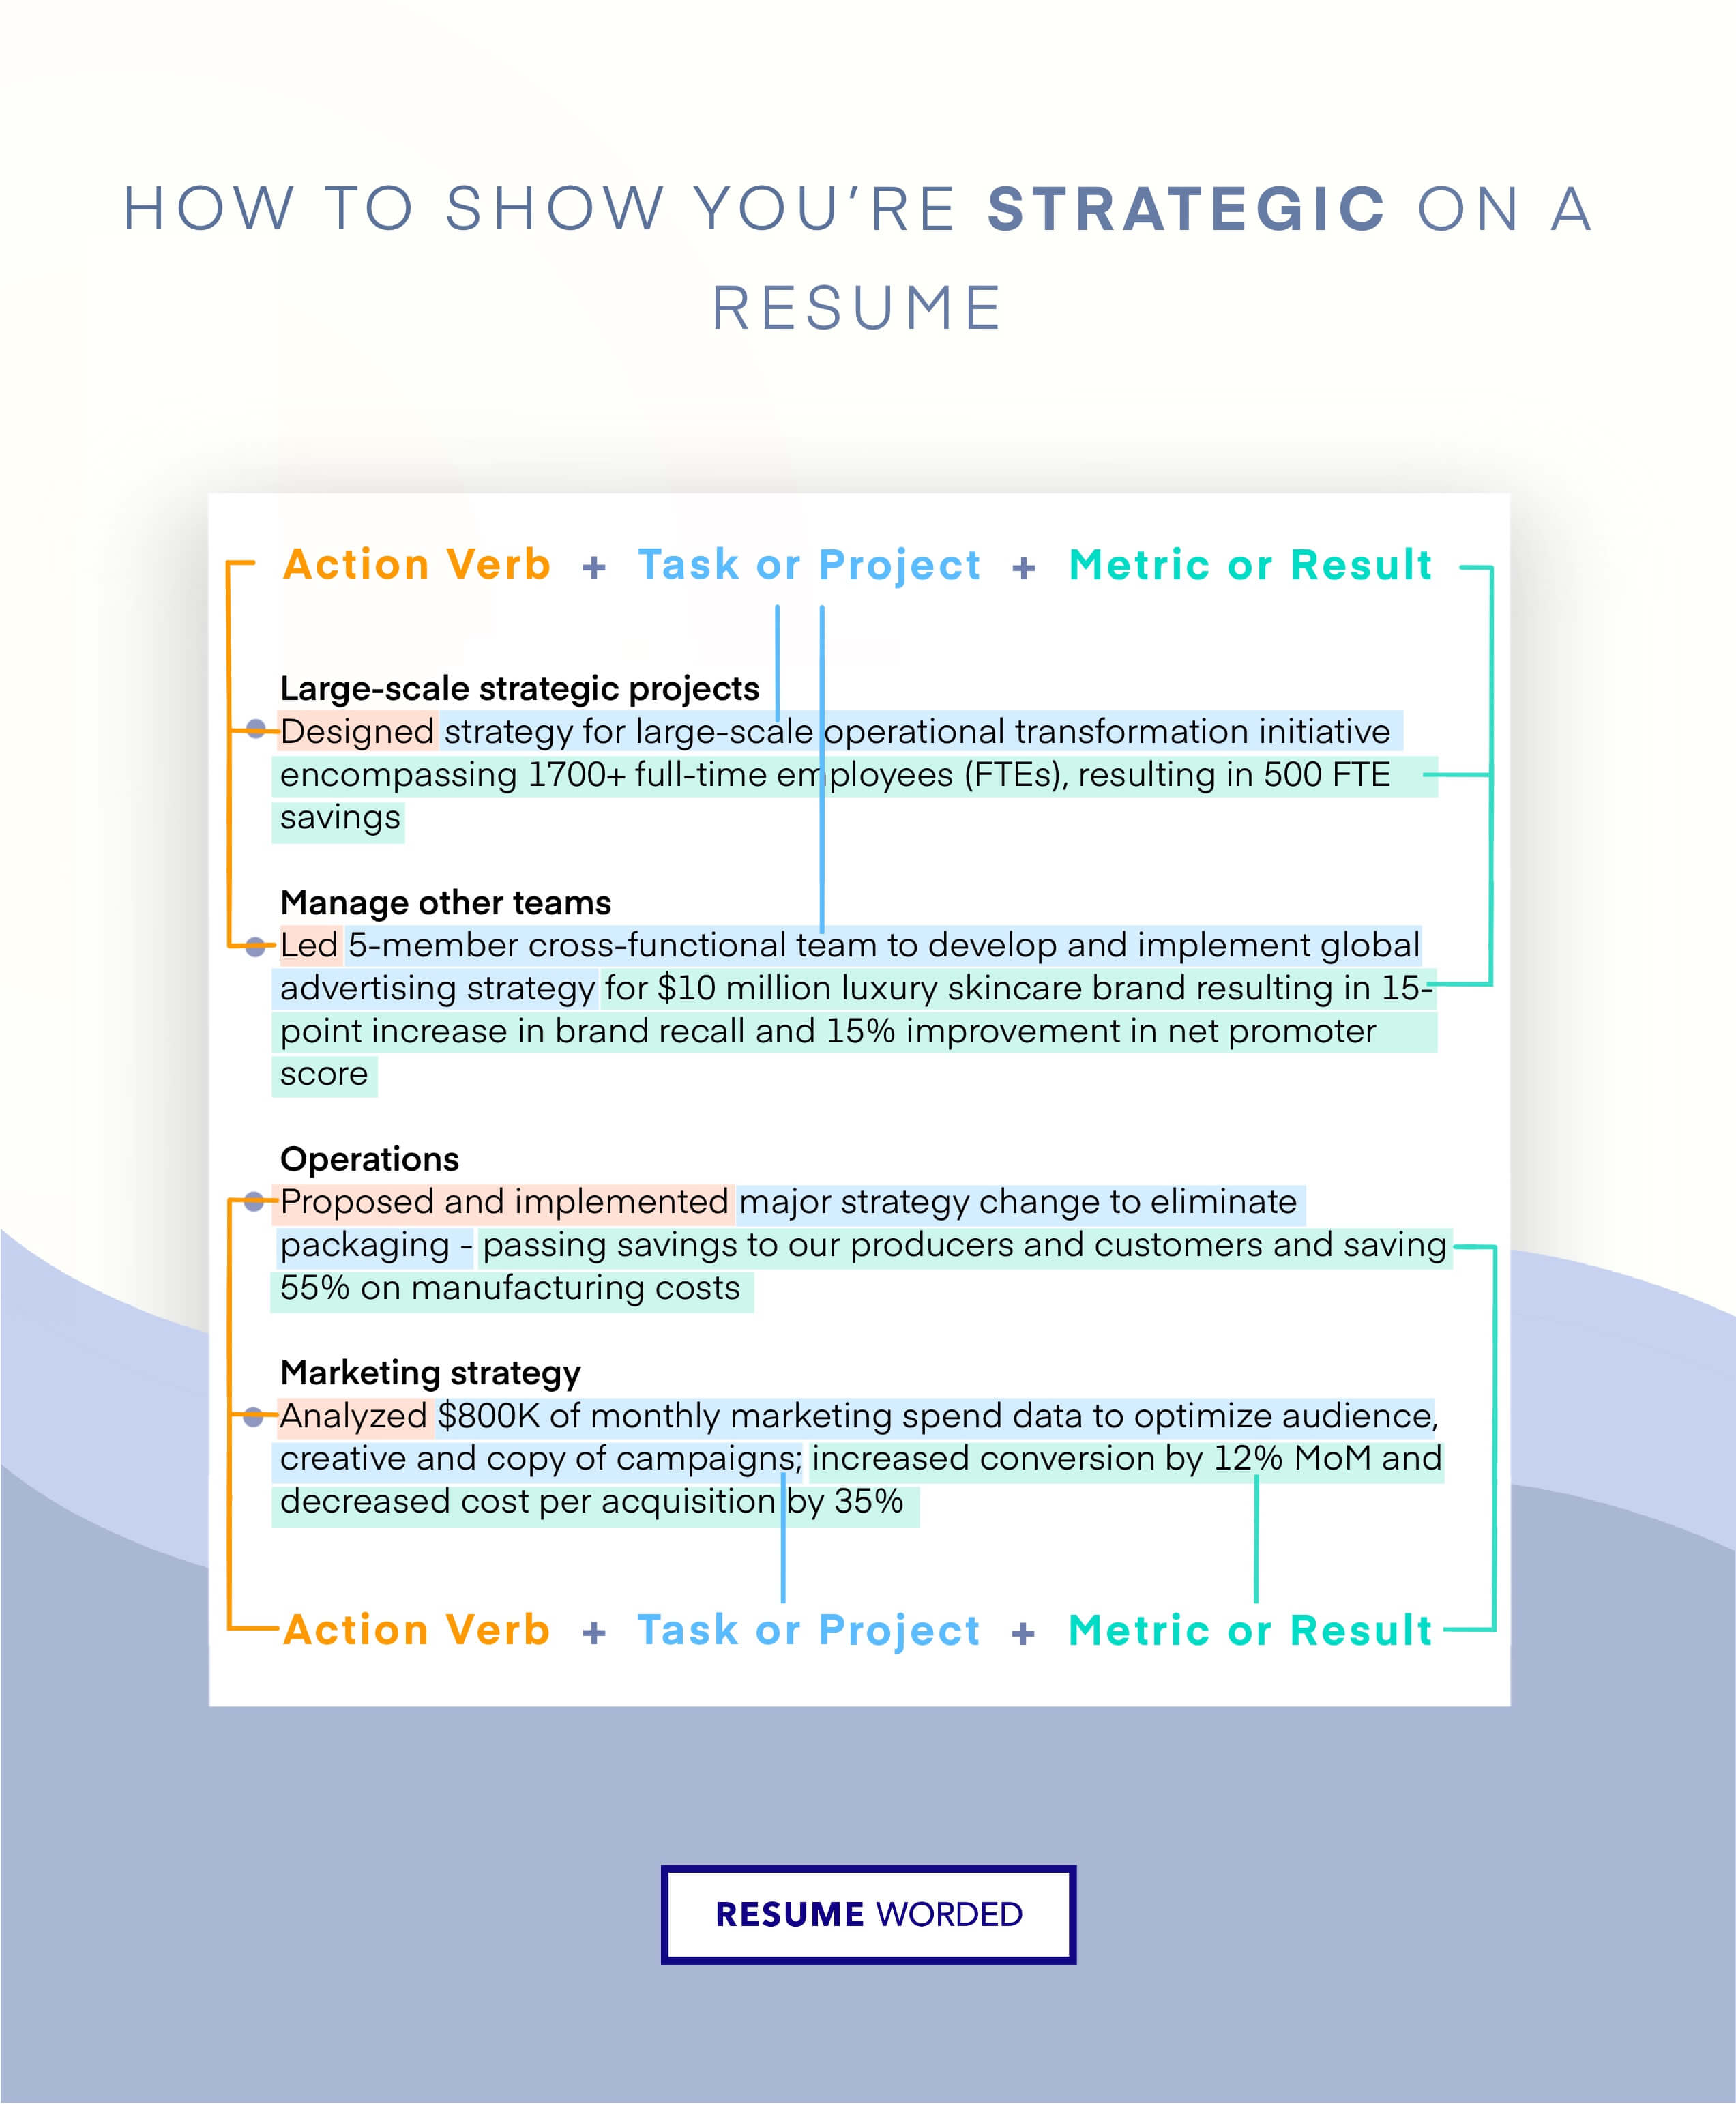 Showcase your capacity for strategic thinking - Social Media Marketing Manager CV